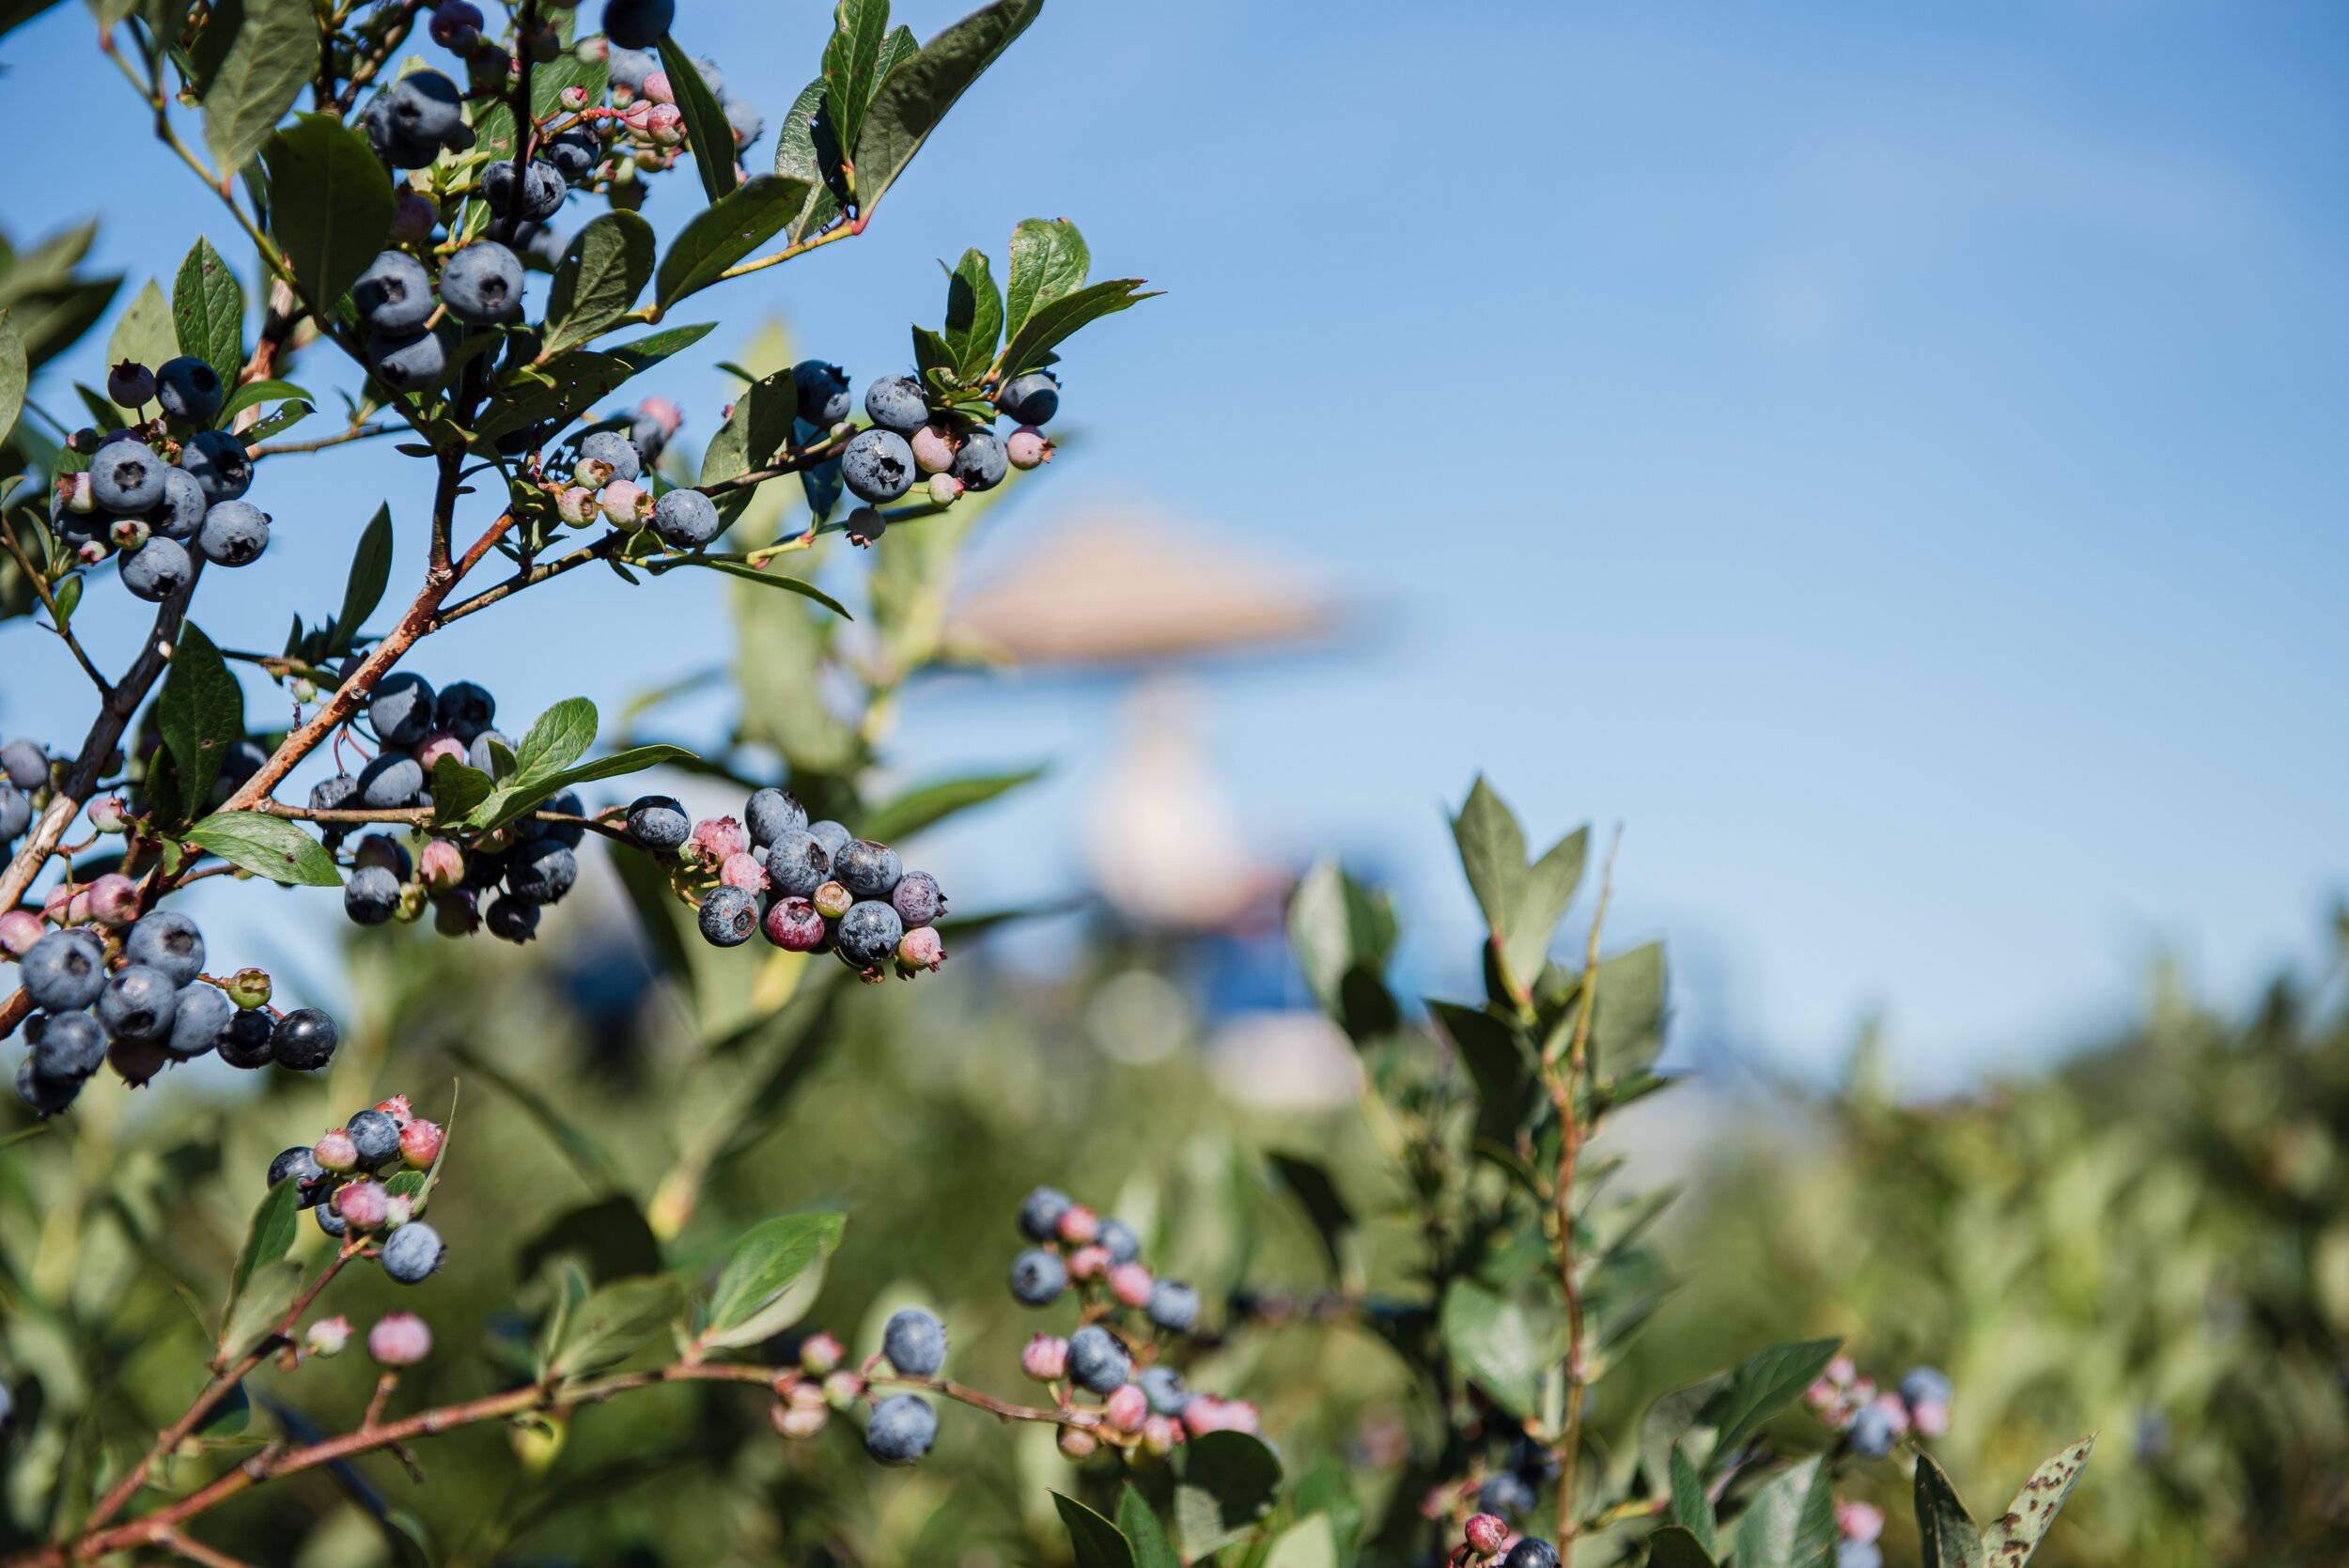 Organic blueberry farm has come a long way